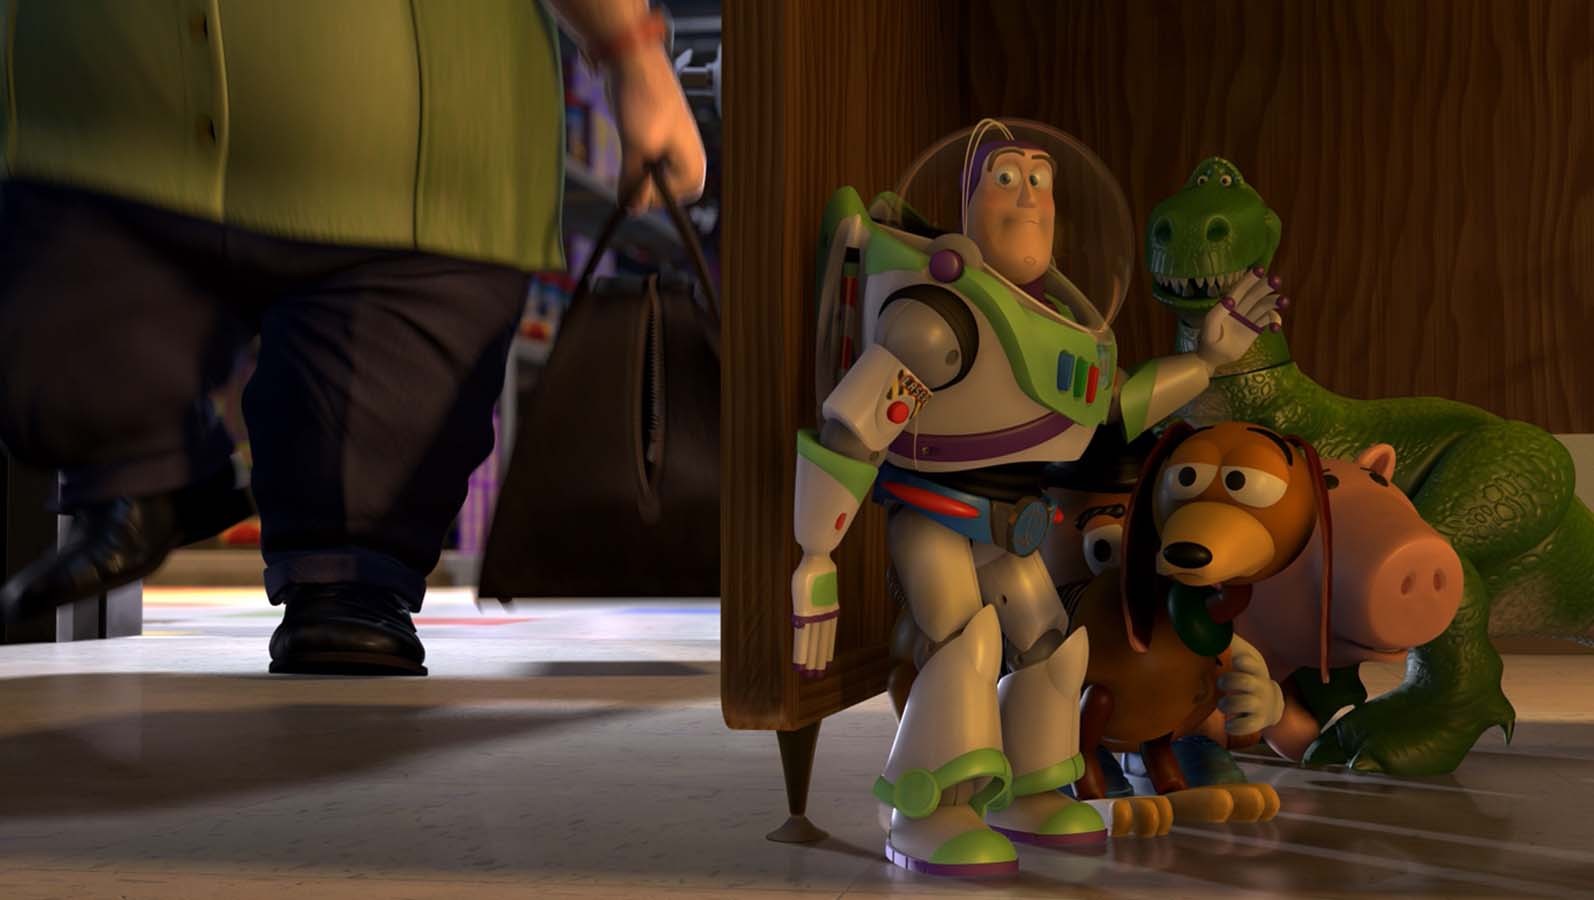 General 1594x900 Toy Story 2 Buzz Lightyear Pixar Animation Studios animated movies movies film stills